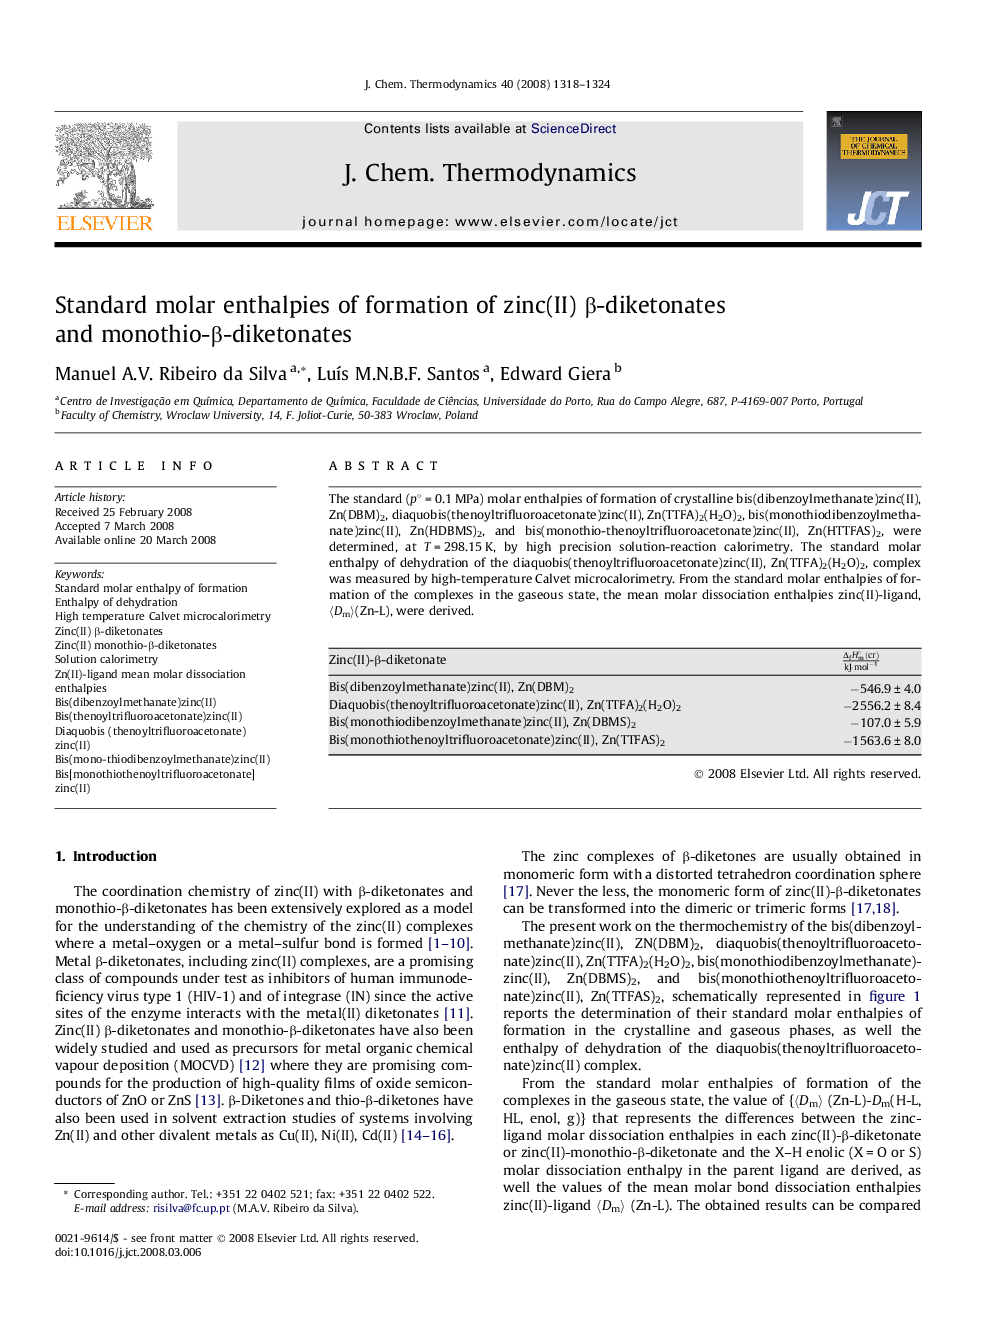 Standard molar enthalpies of formation of zinc(II) β-diketonates and monothio-β-diketonates